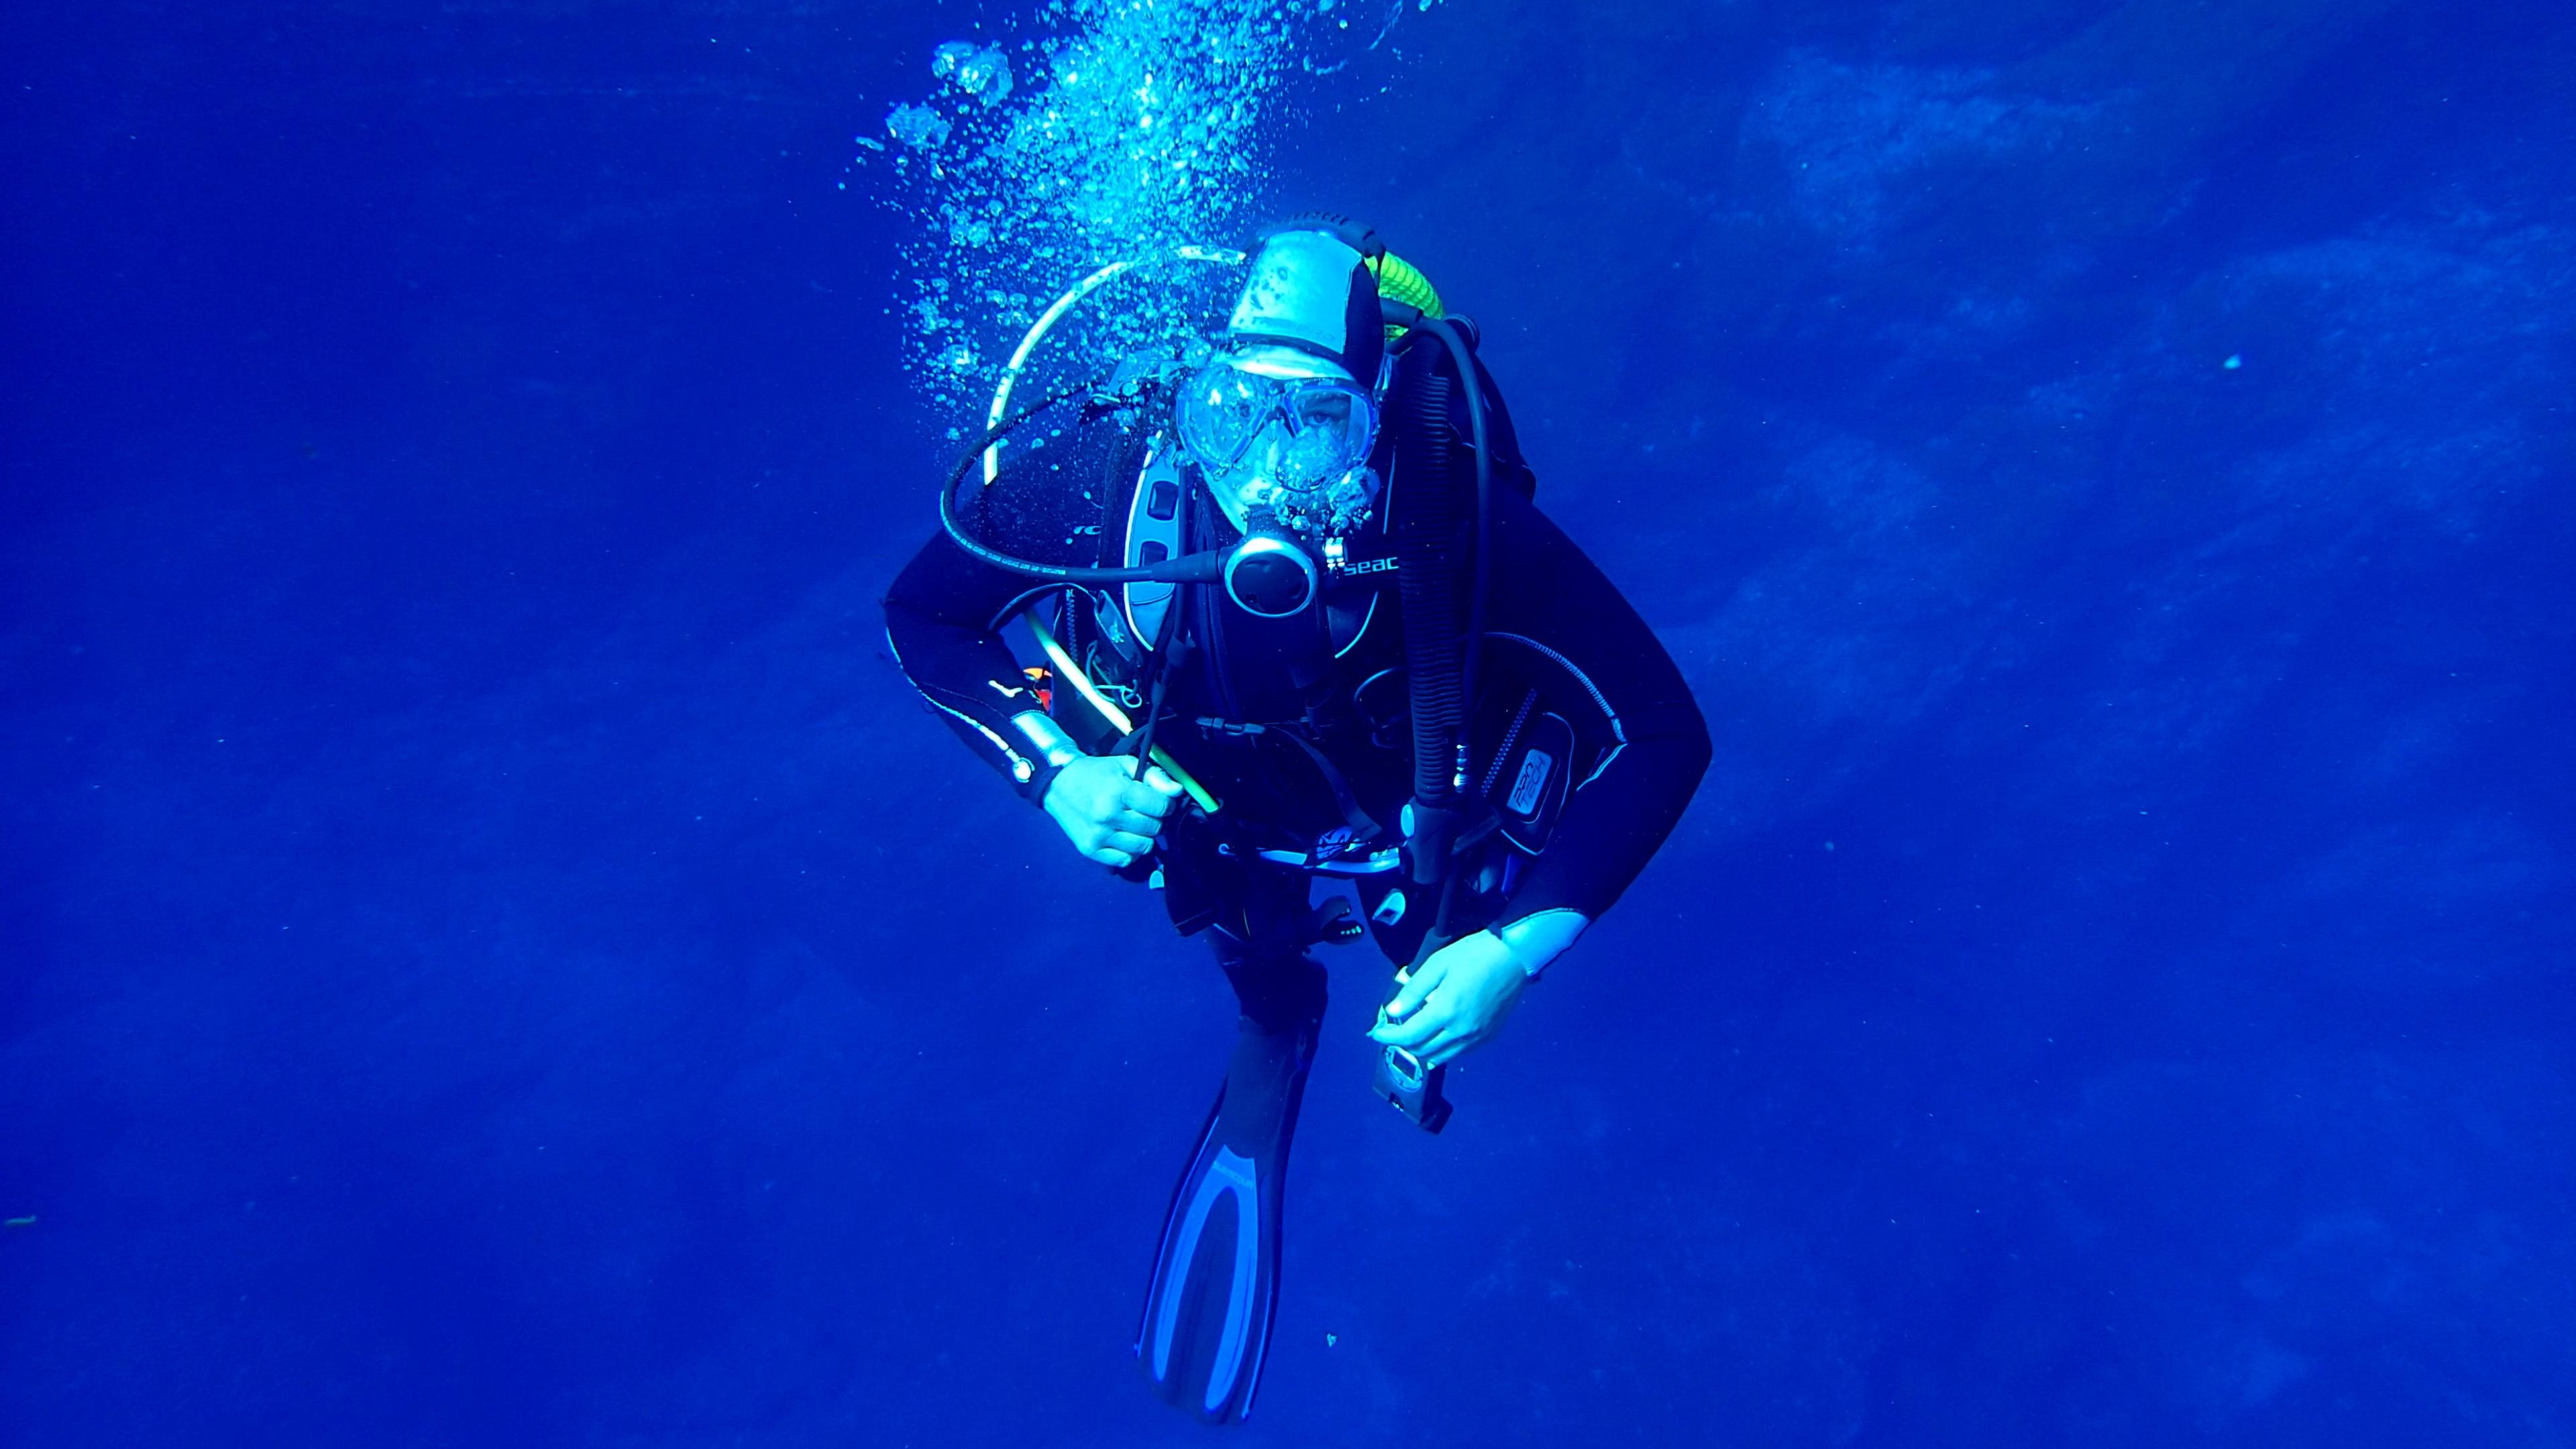 Open water diver course, Wind centro de atividades, Dive into the unknown, Begin your underwater journey, 3840x2160 4K Desktop